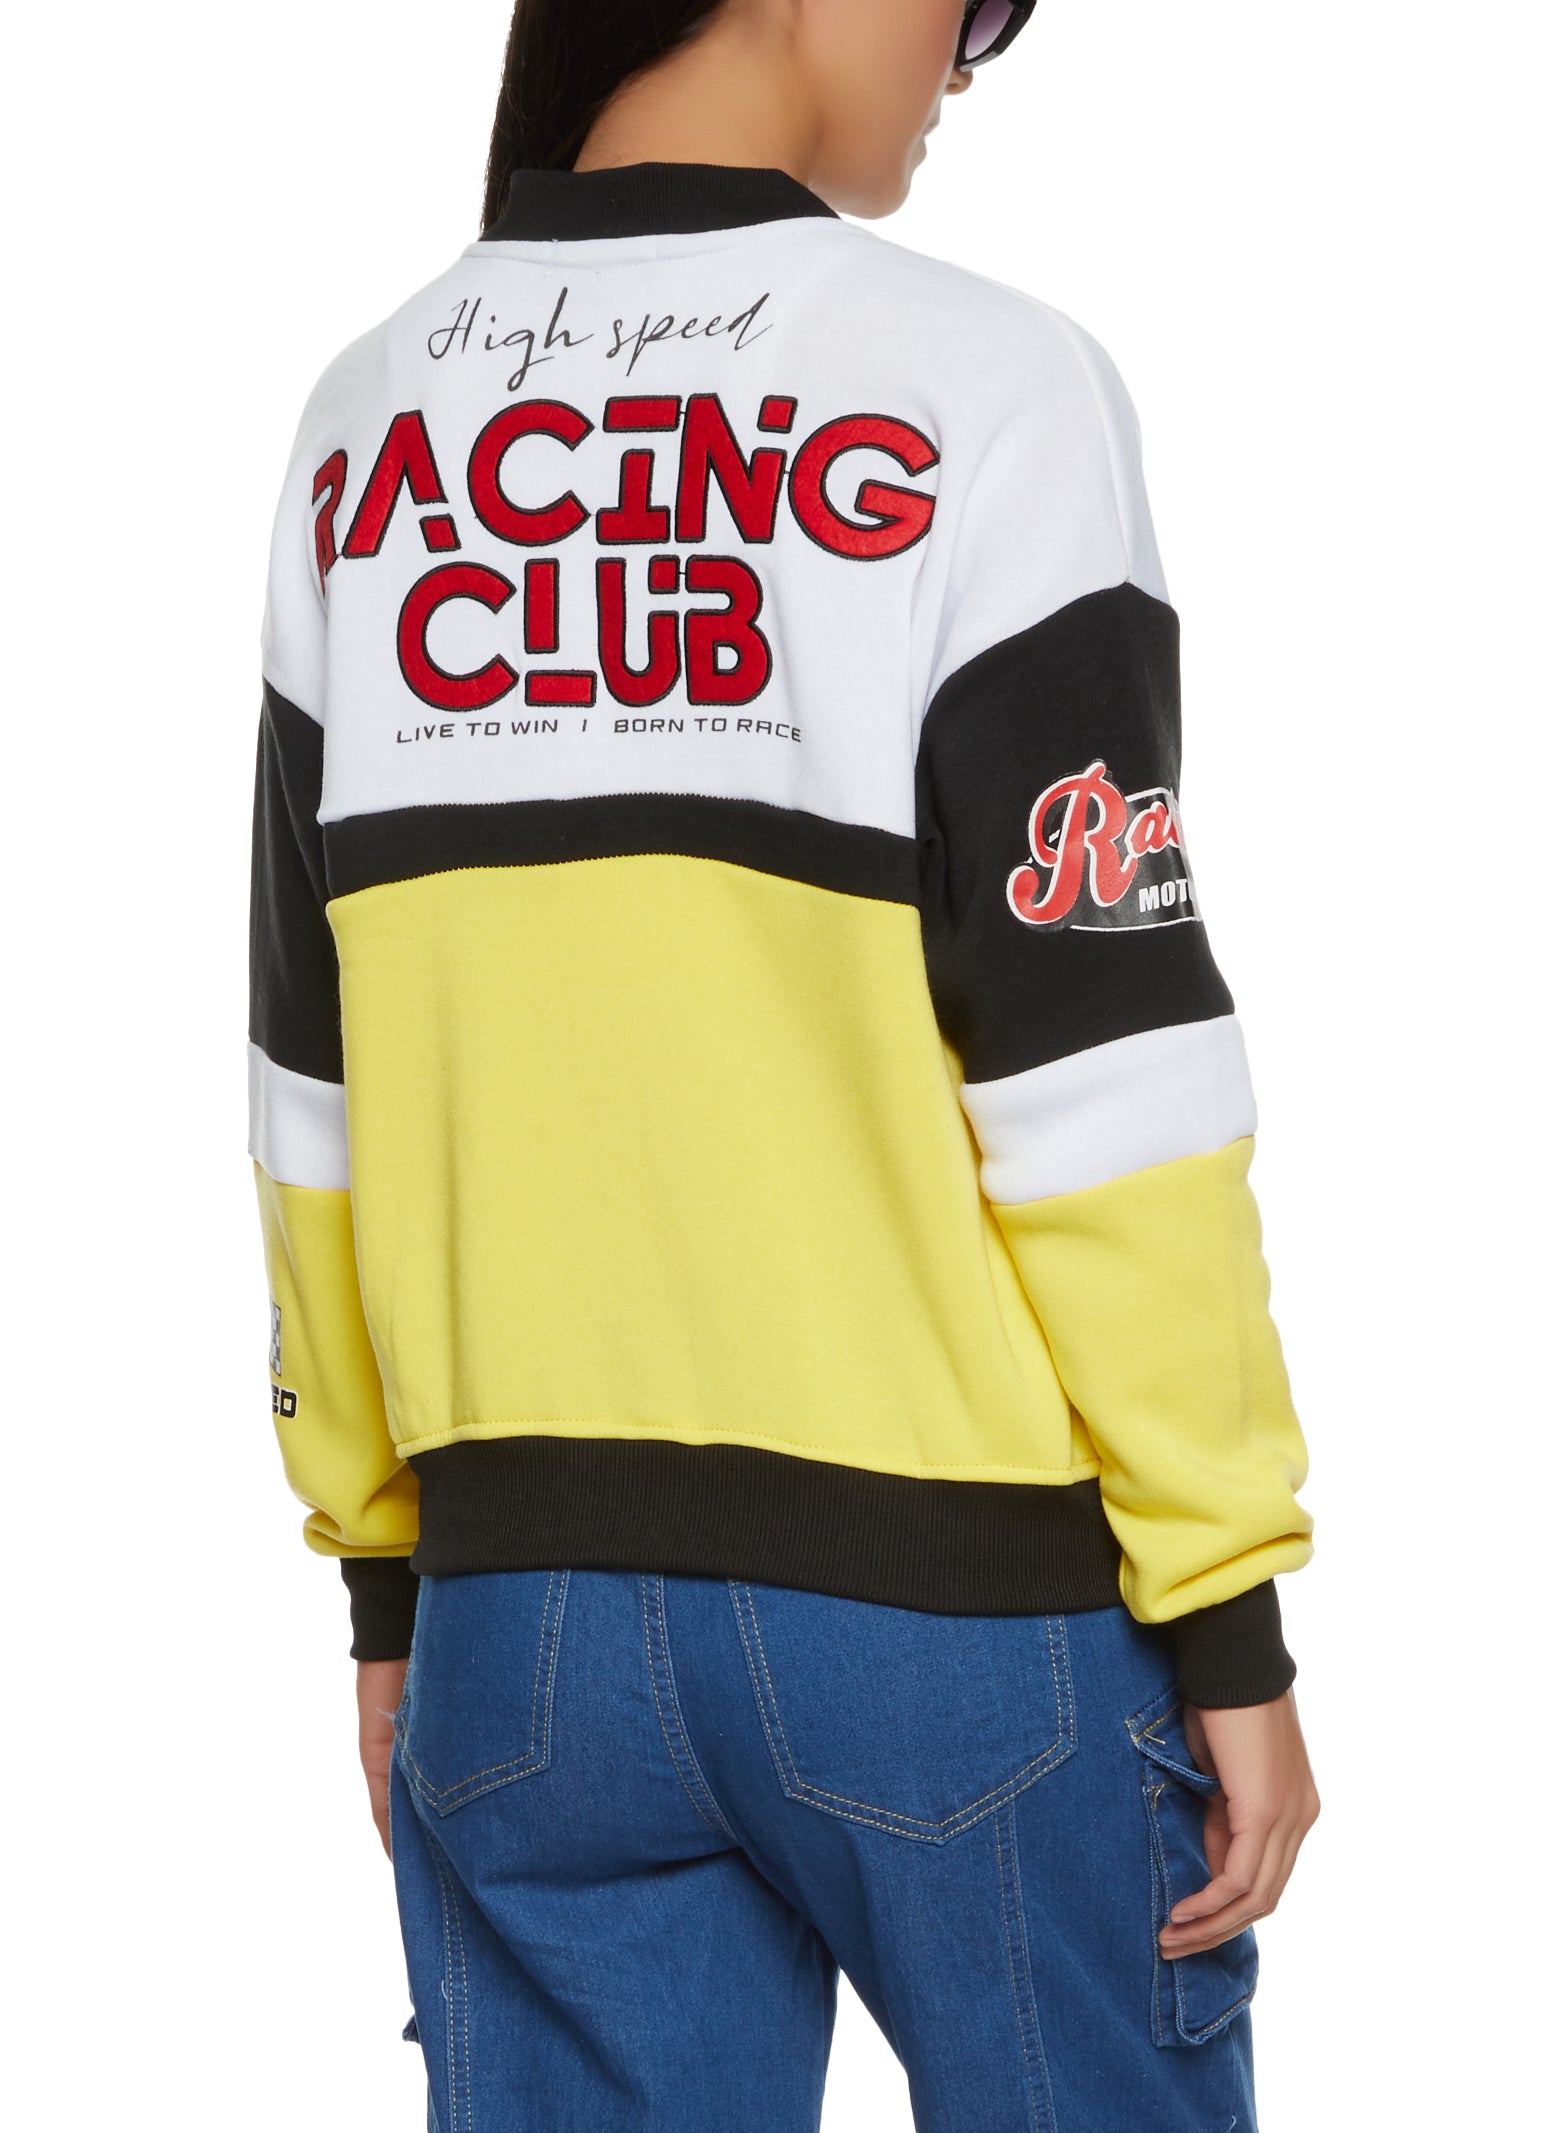 Racing Club Bomber Jacket